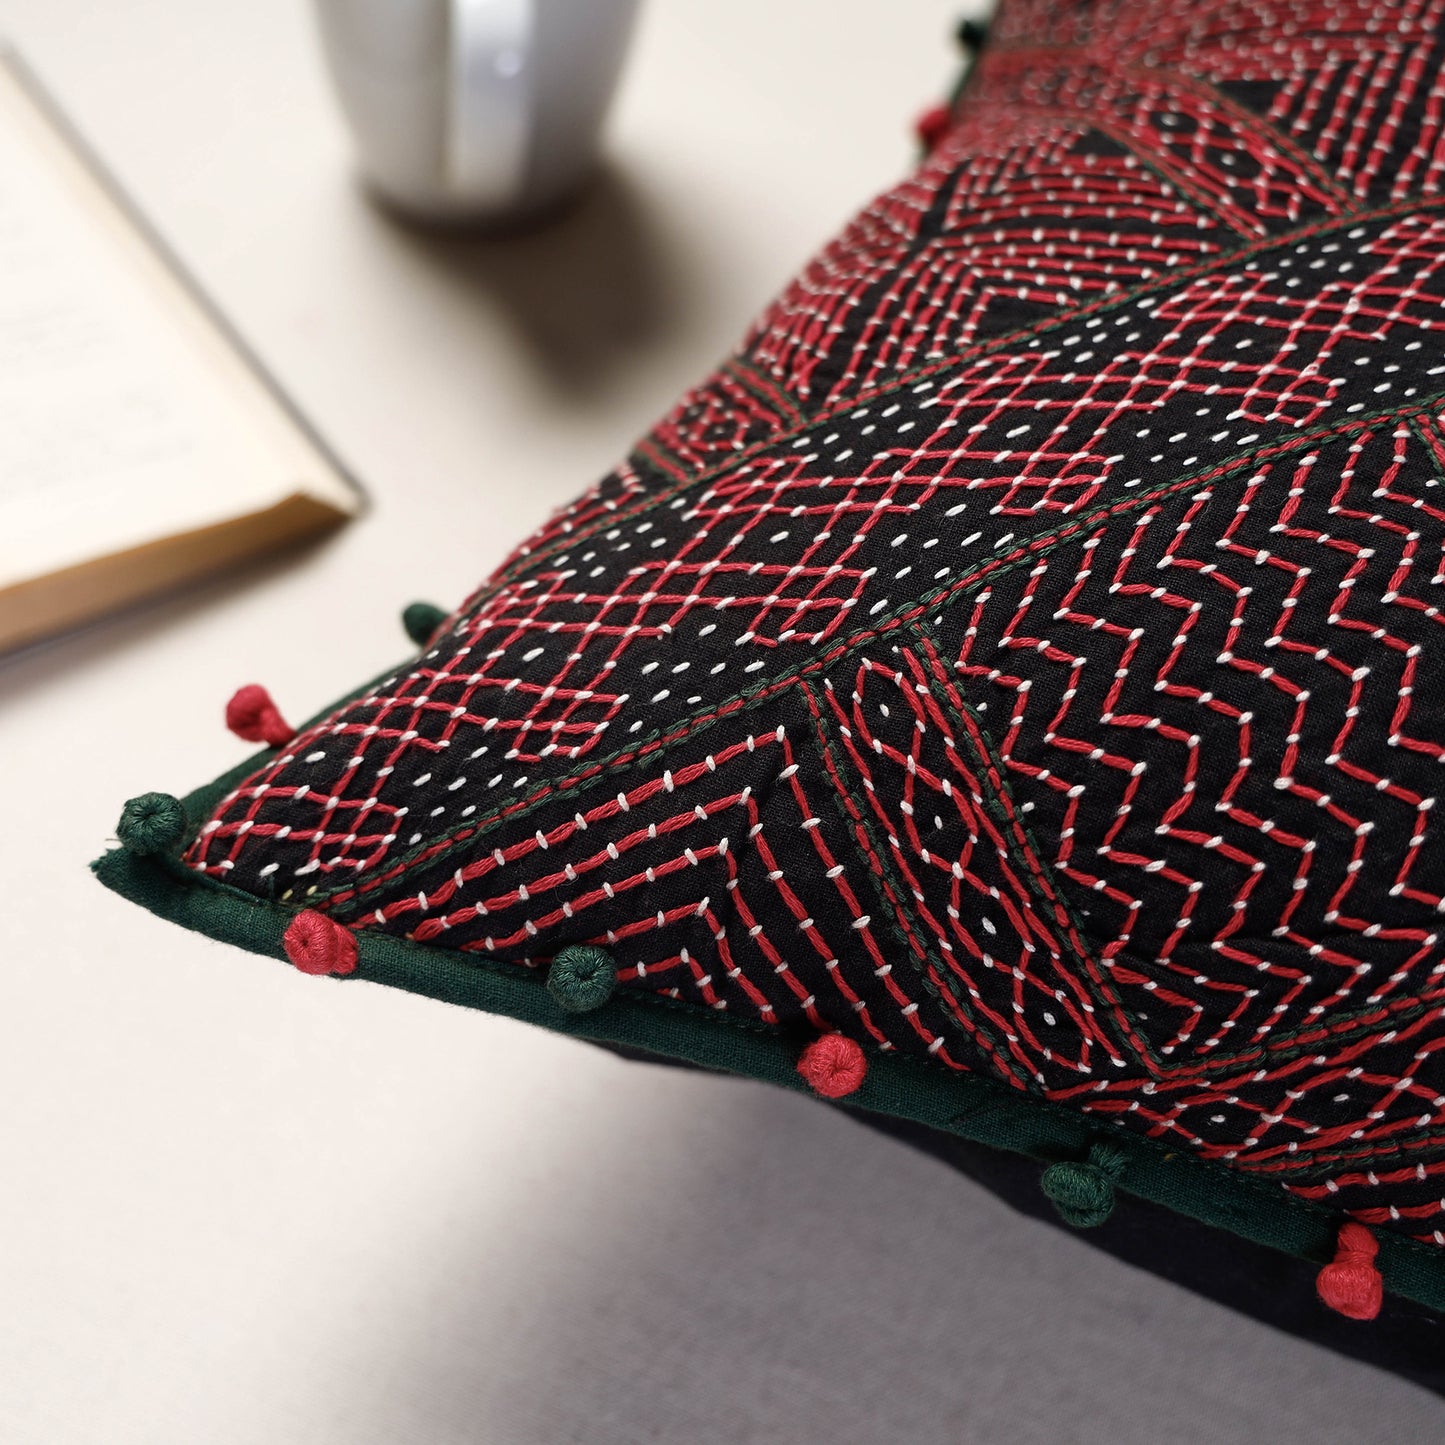 Maroon - Lambani Embroidery Cushion Cover (16 x 16 in)